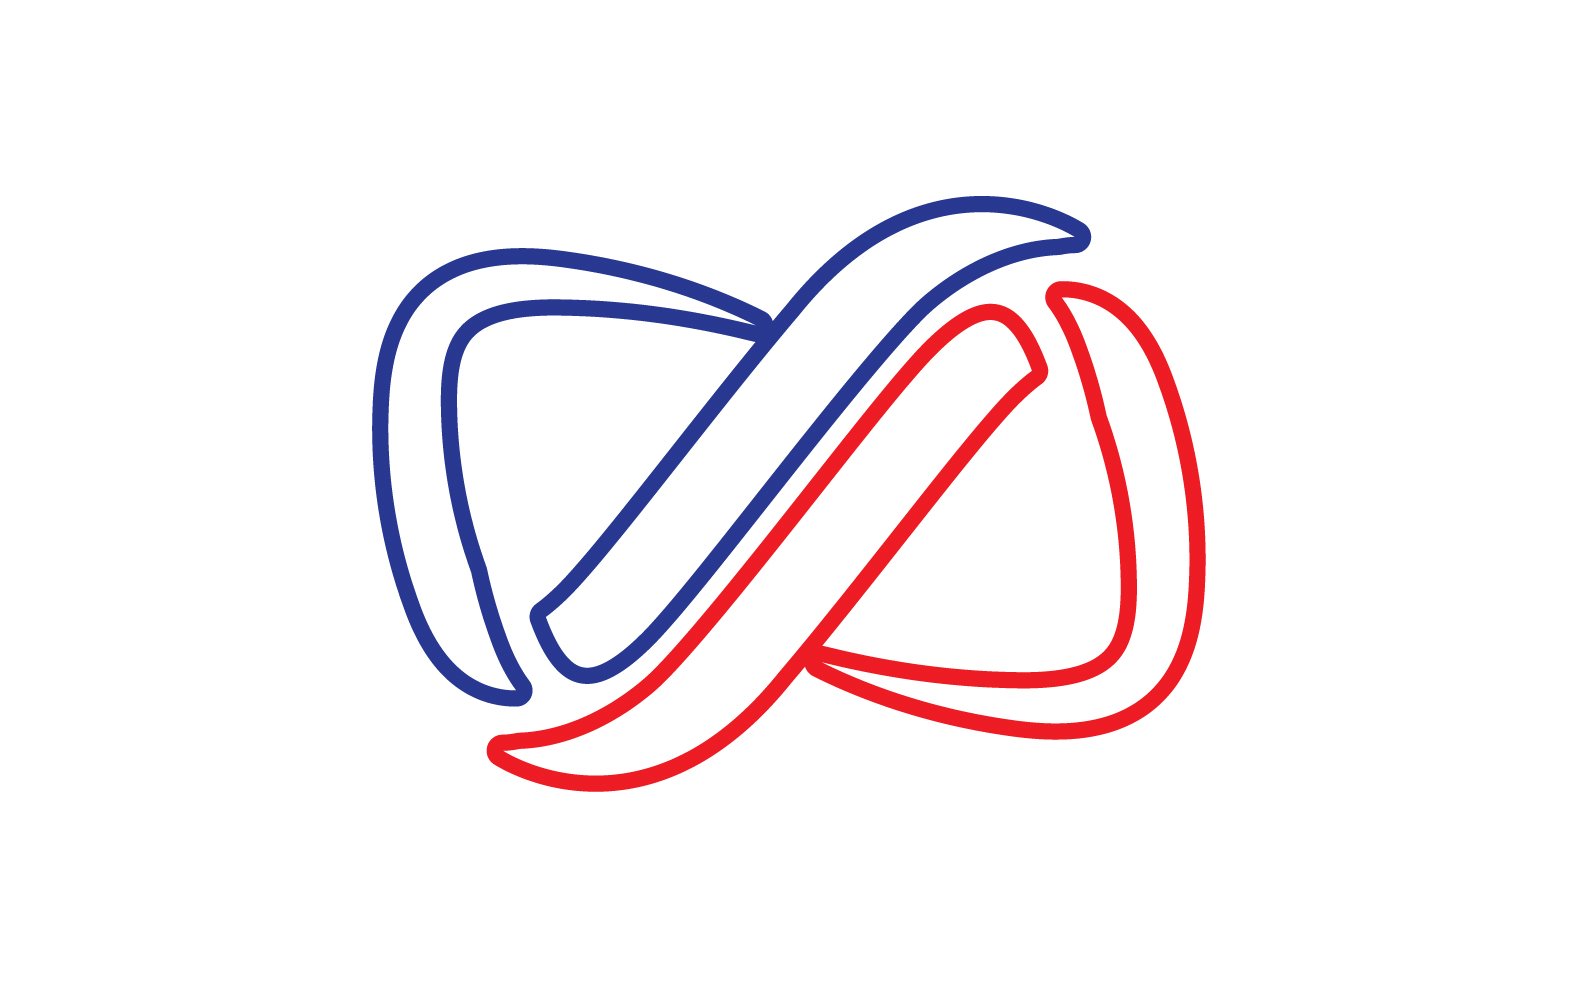 Infinity loop line logo  symbol vector v15